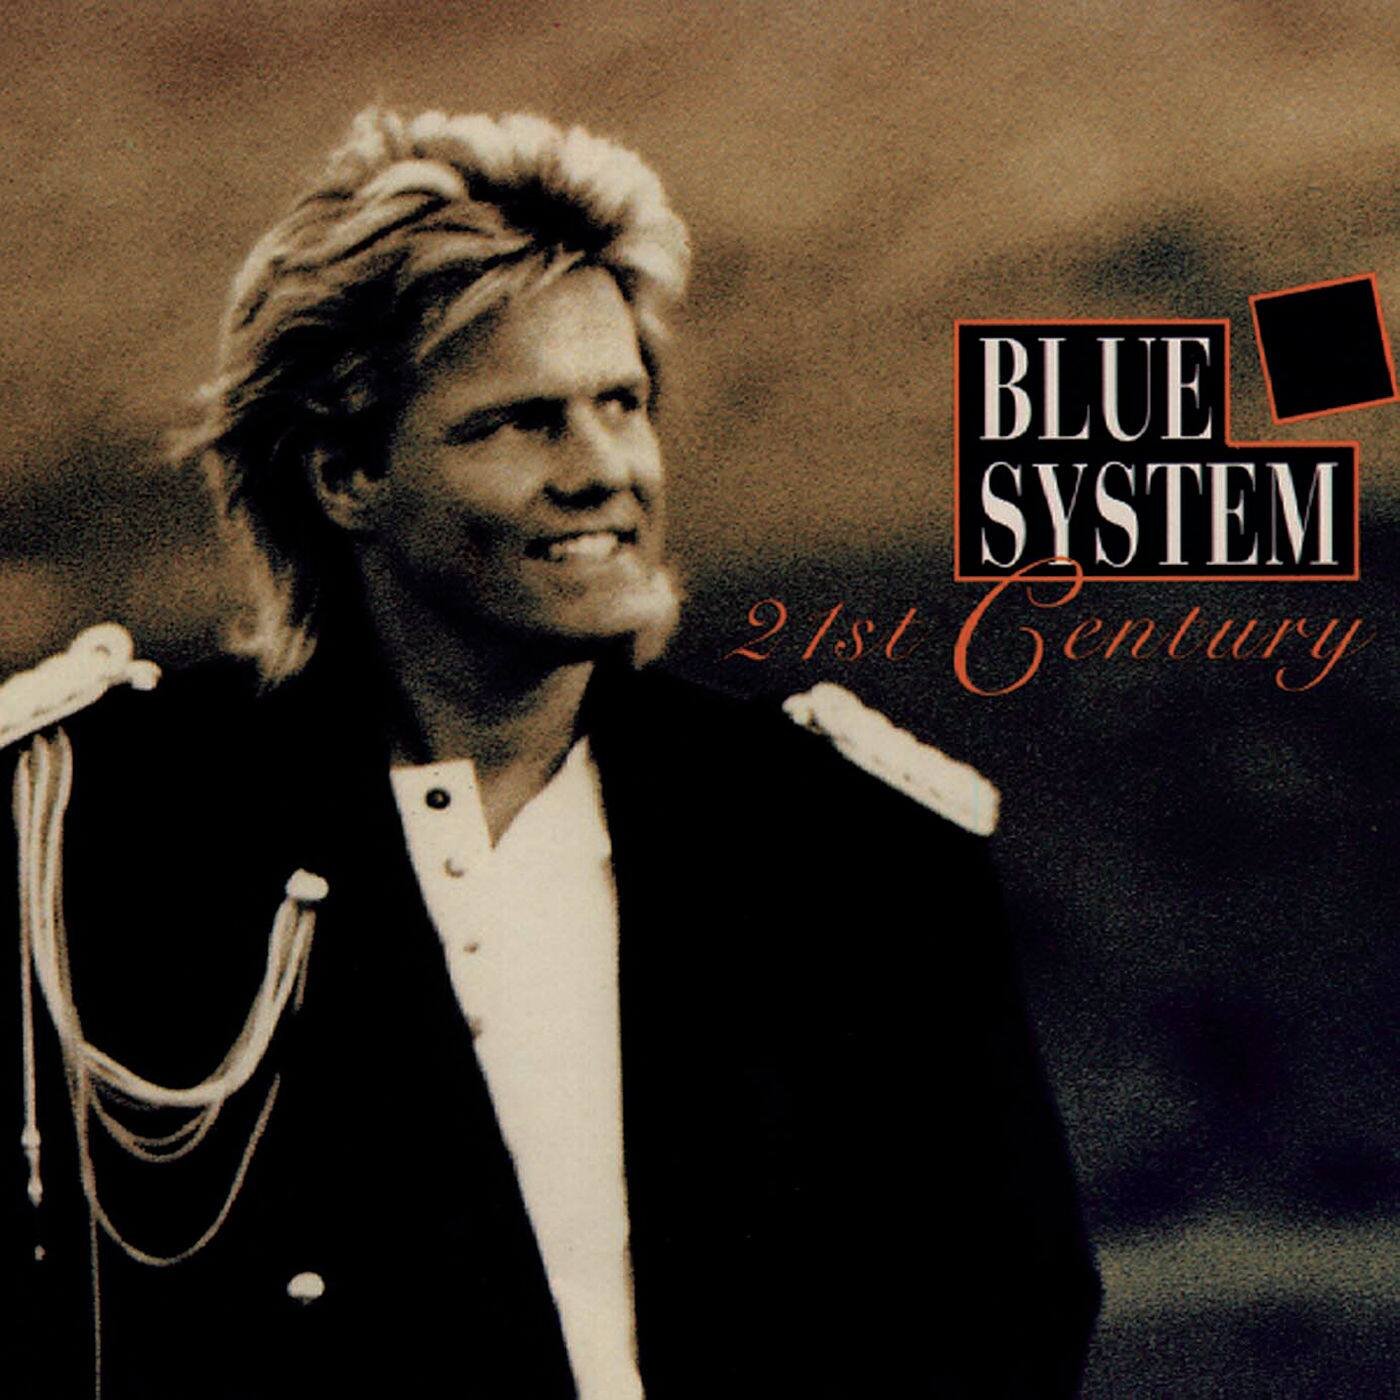 Century blue. Дитер болен 1994. Blue System 1994 21st Century кассета. Blue System обложка. Blue System обложки альбомов.